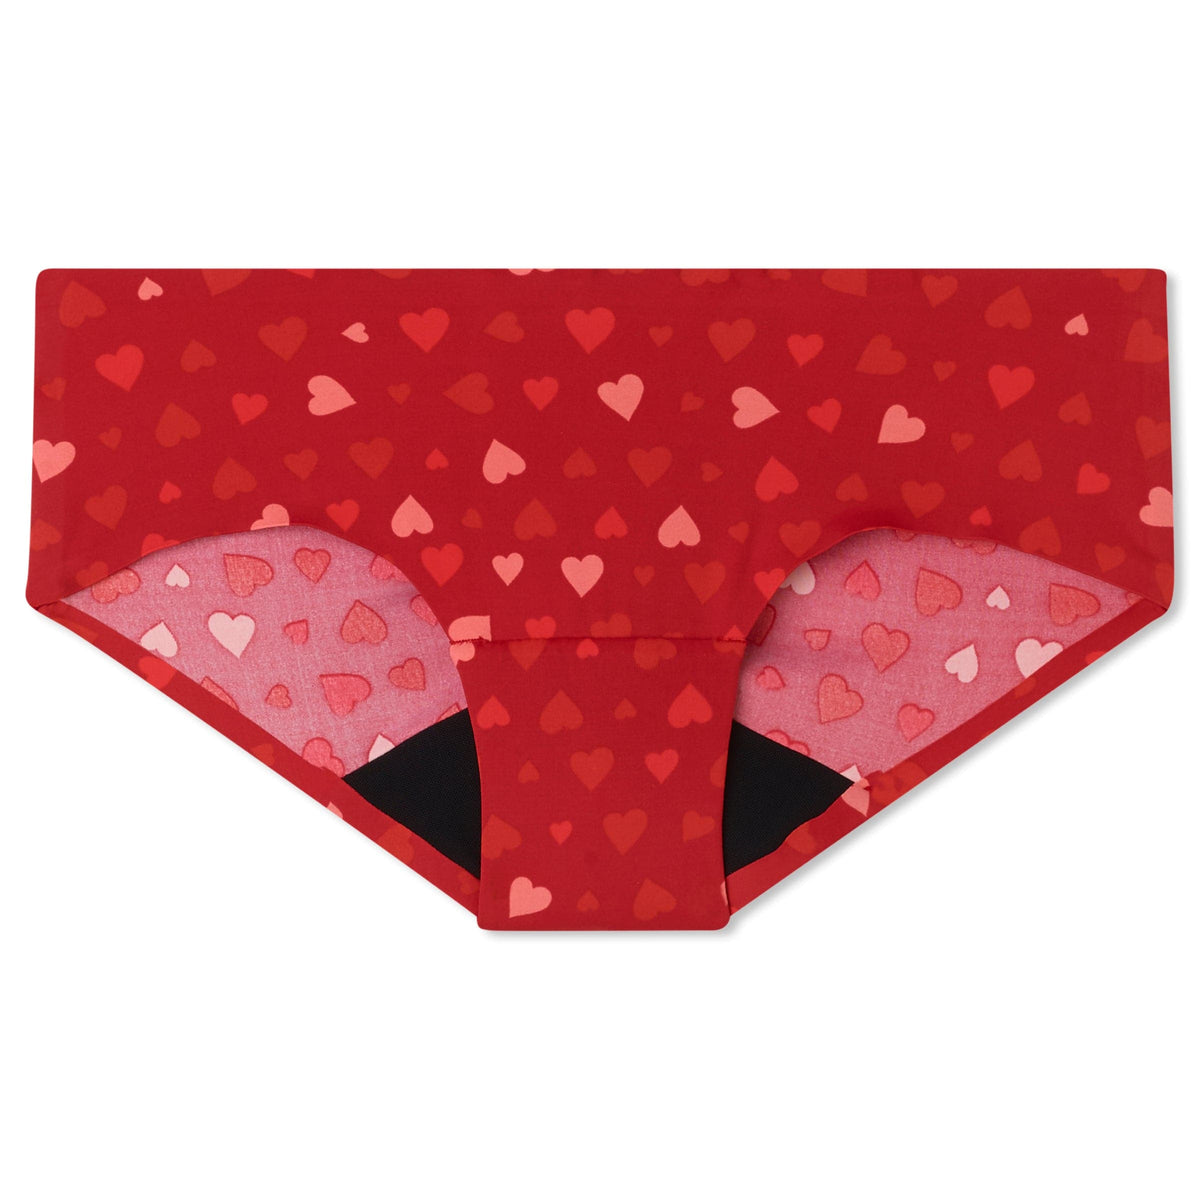 Period underwear  Kit of 2 - Get started – Naarica